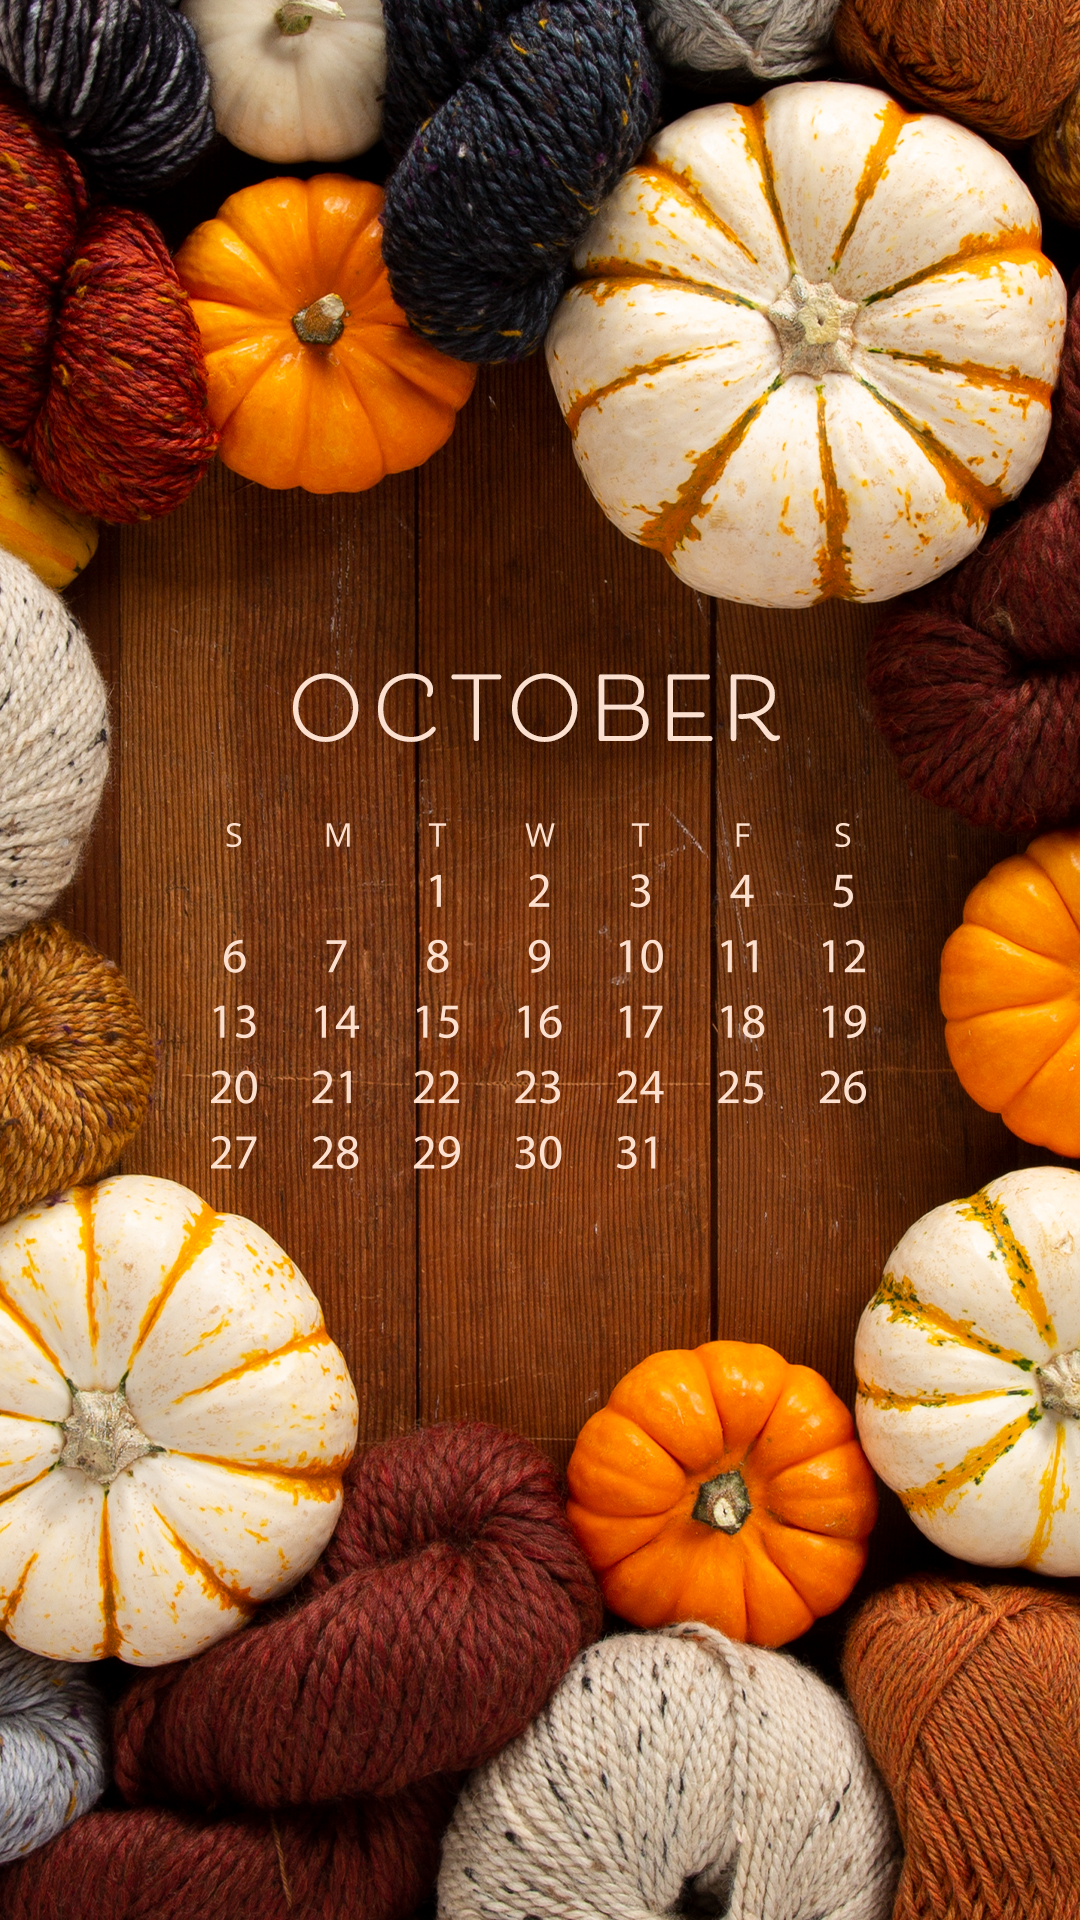 Free Downloadable October Calendar - The Knit Picks Staff Knitting Blog